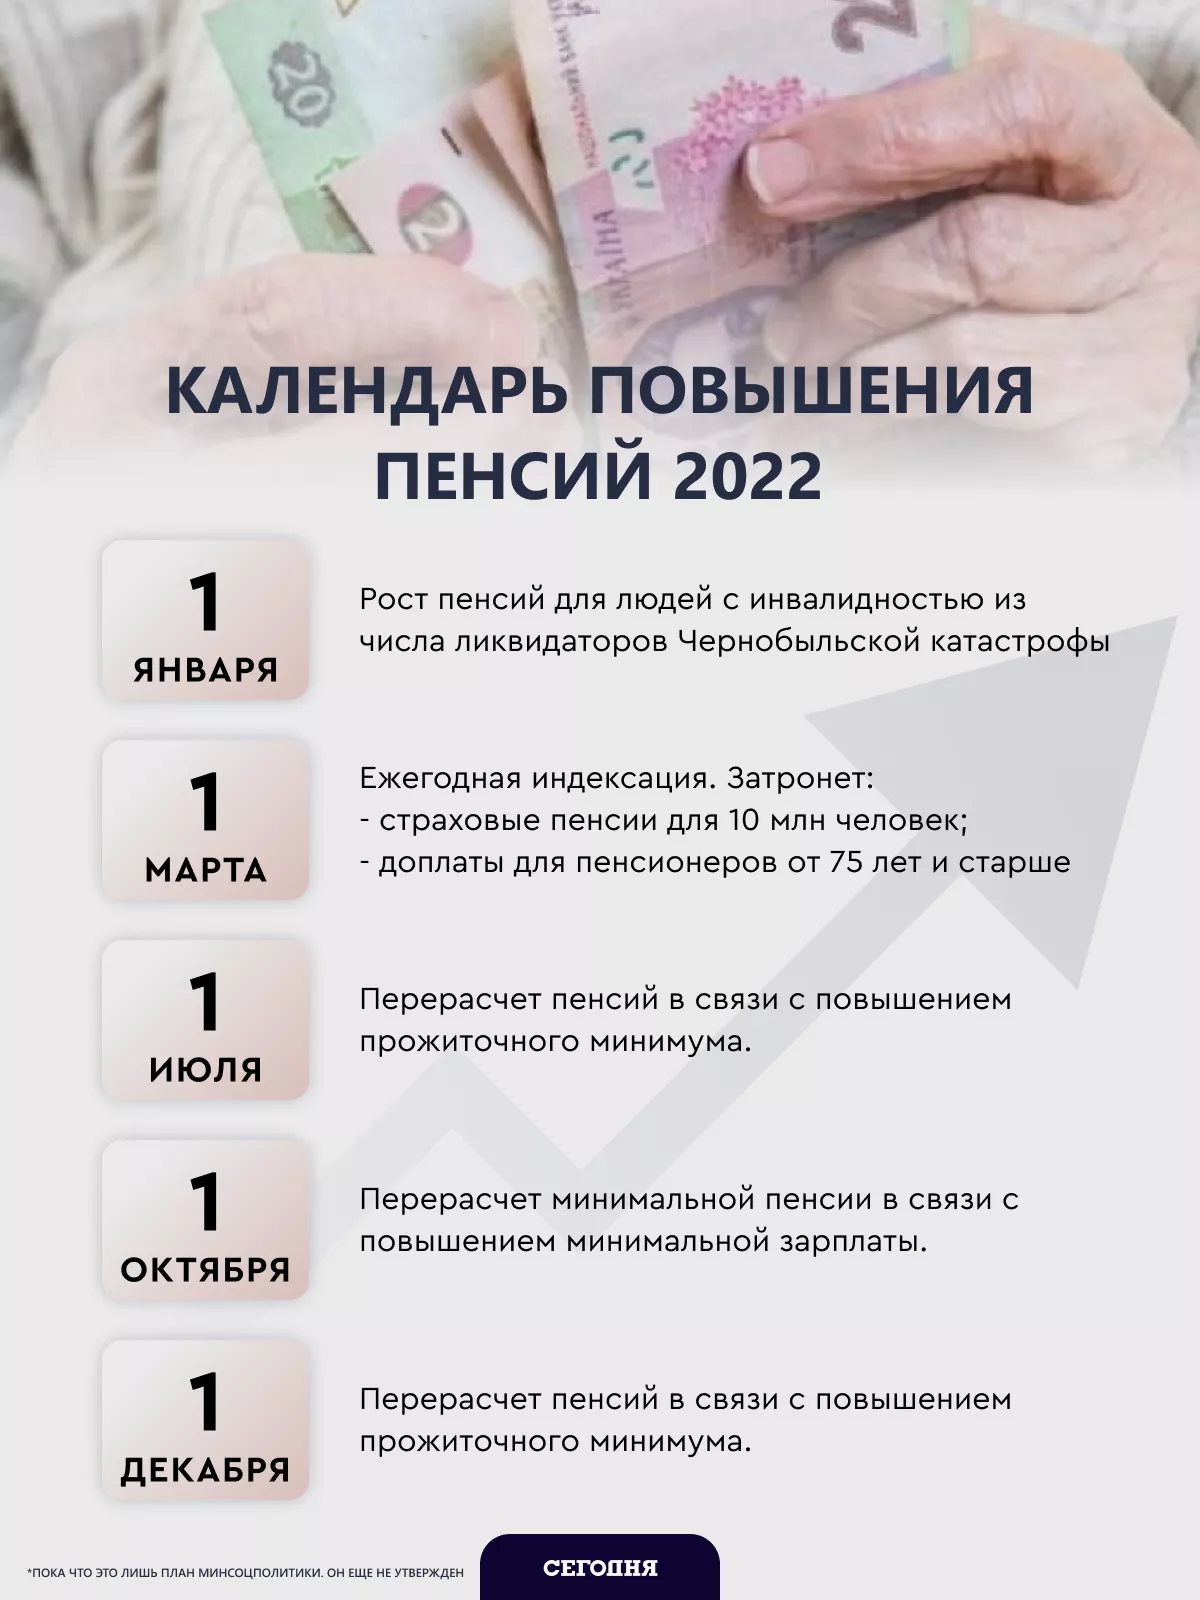 Календарь повышения пенсий на 2022 год